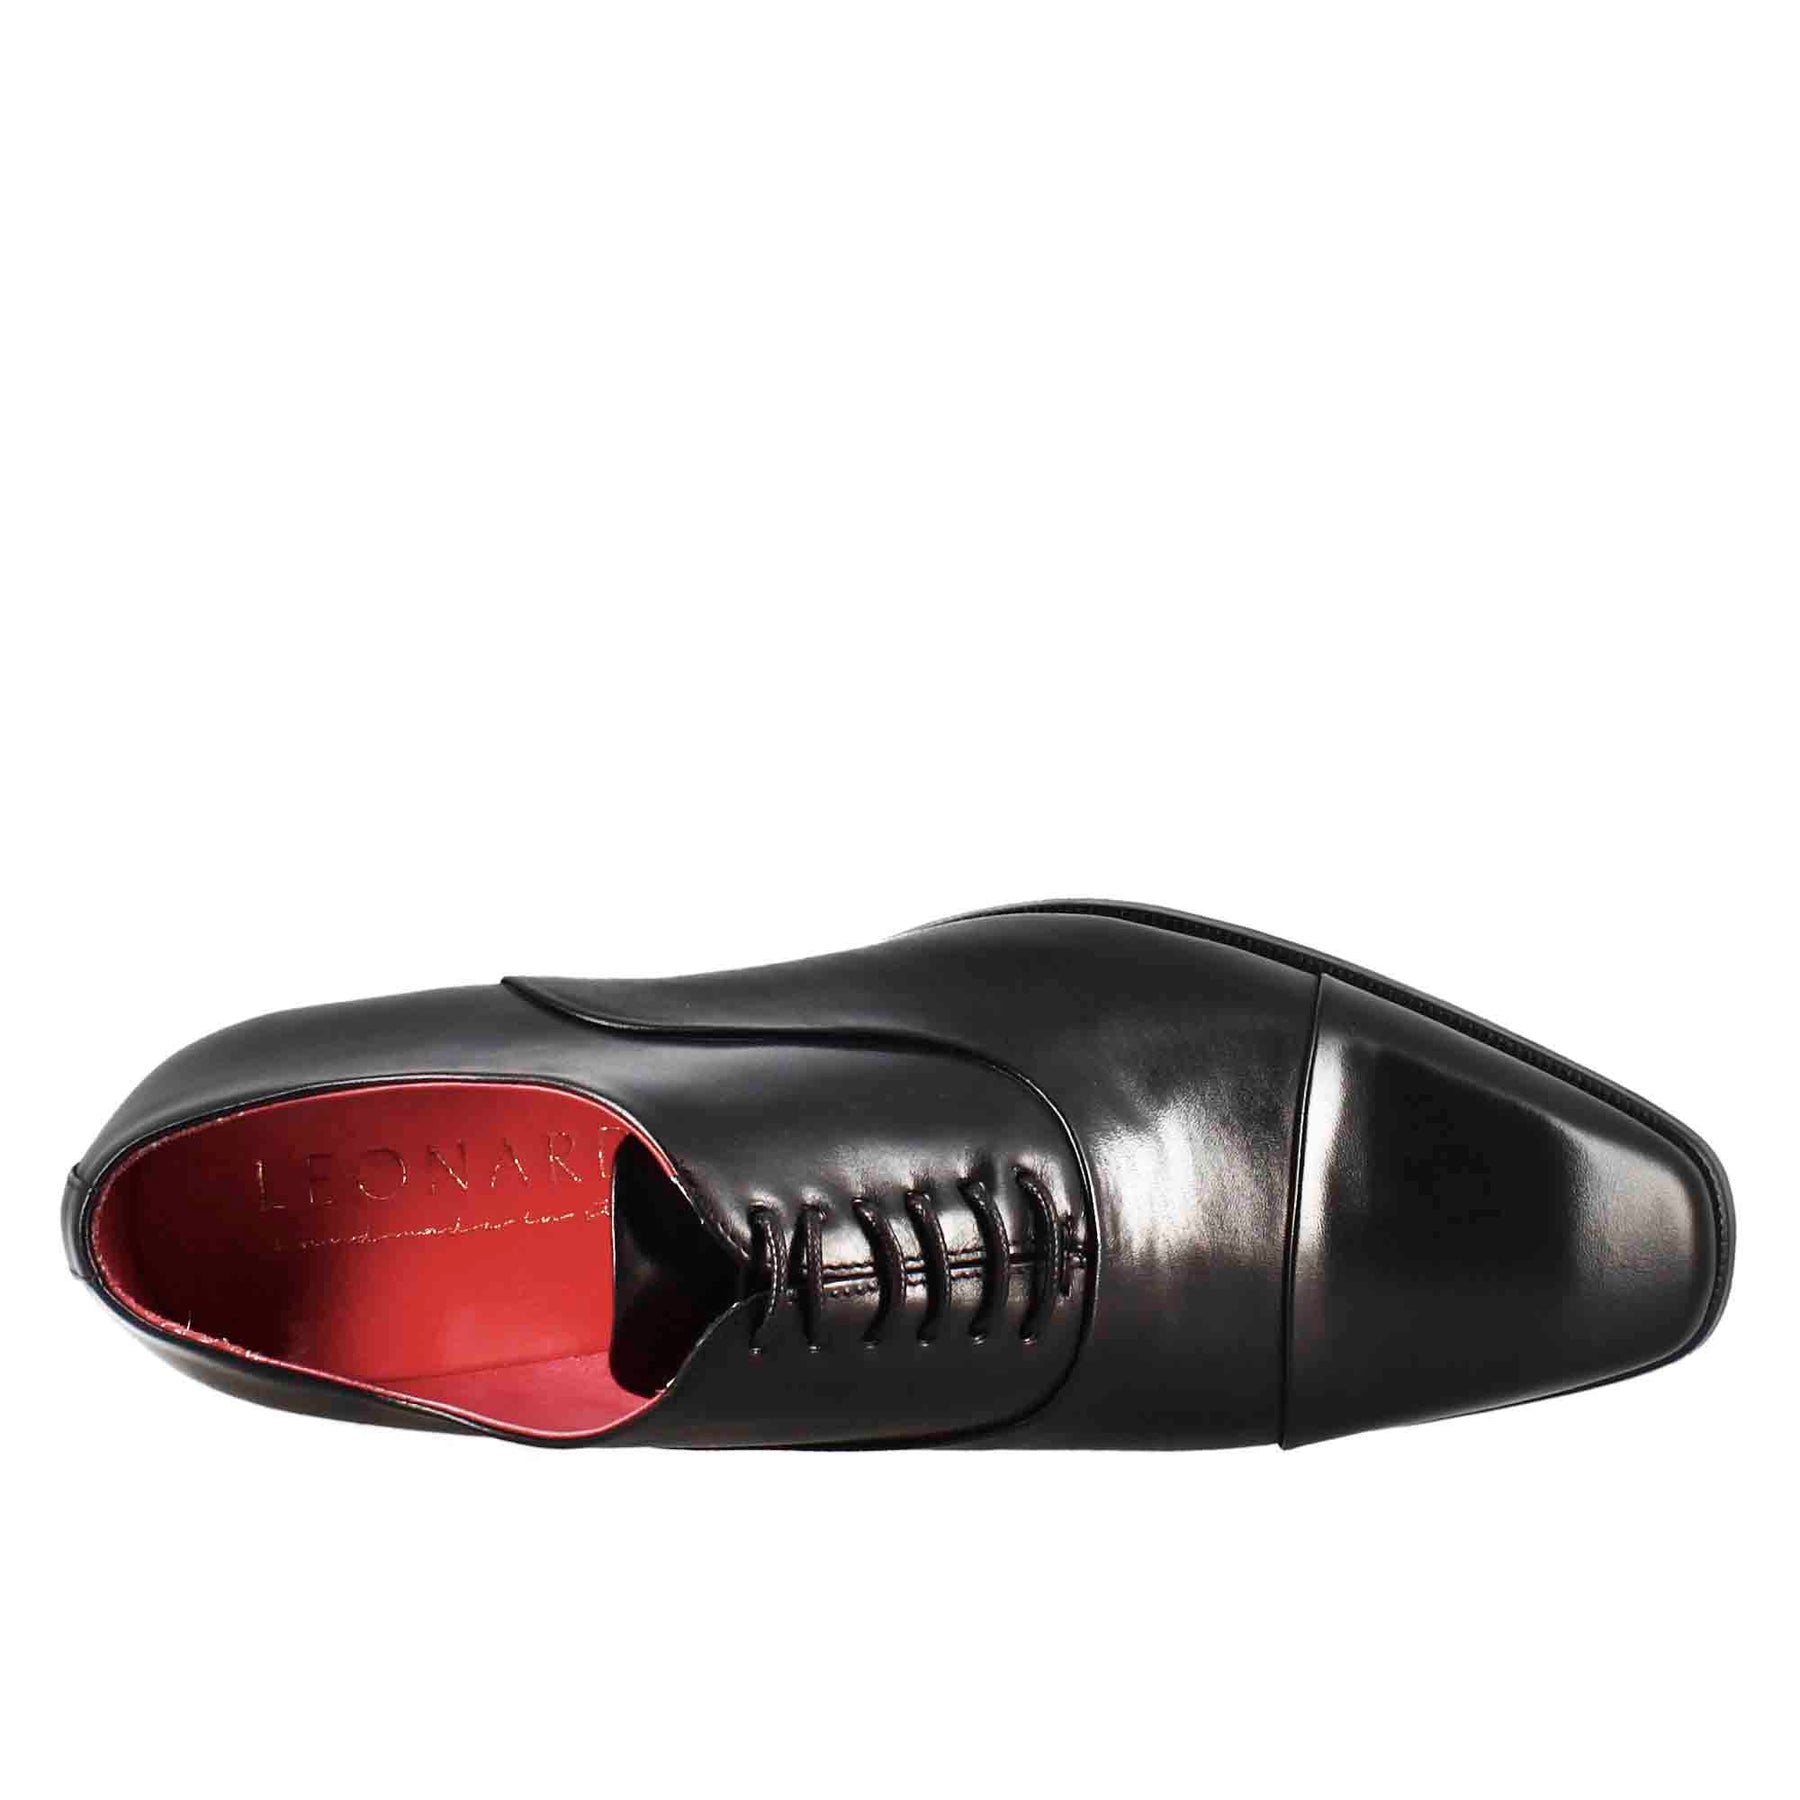 Scarpe francesine con puntale in pelle color nero